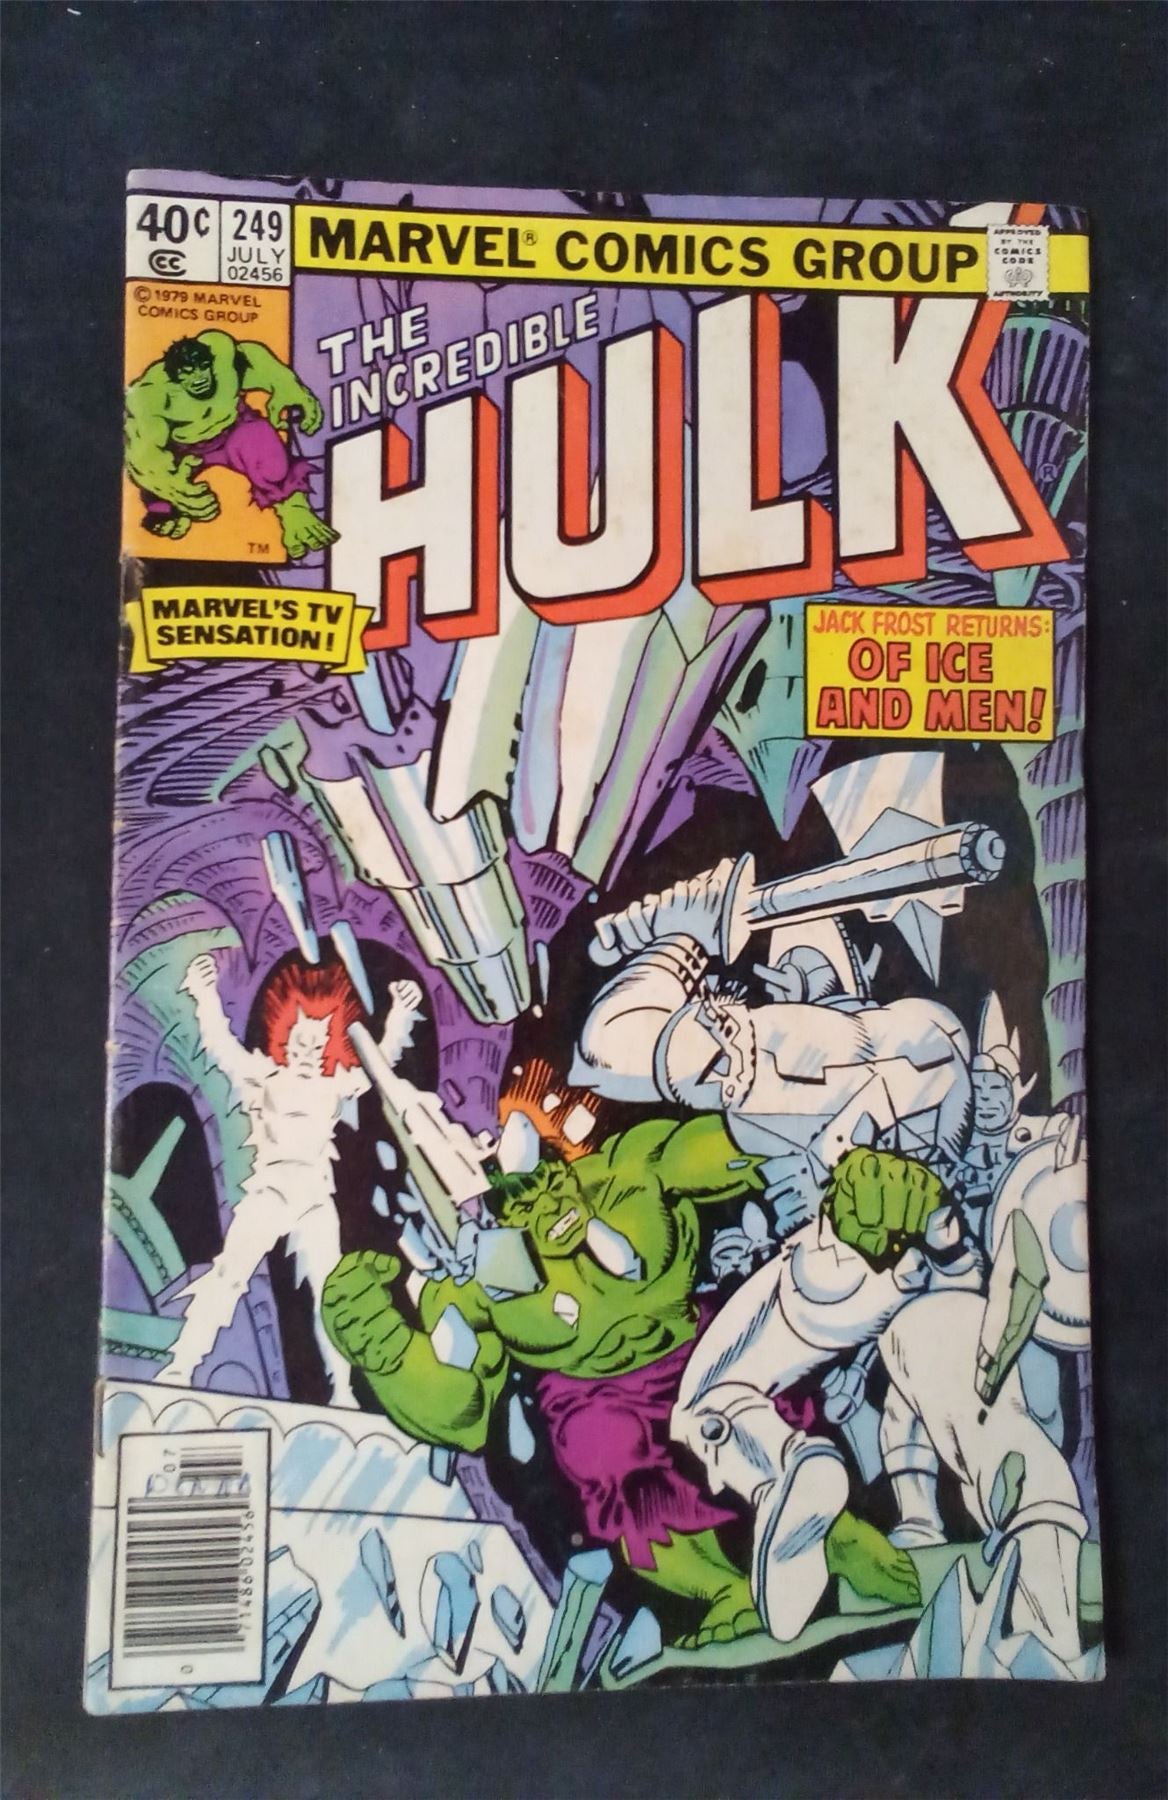 The Incredible Hulk #249 1980 marvel Comic Book